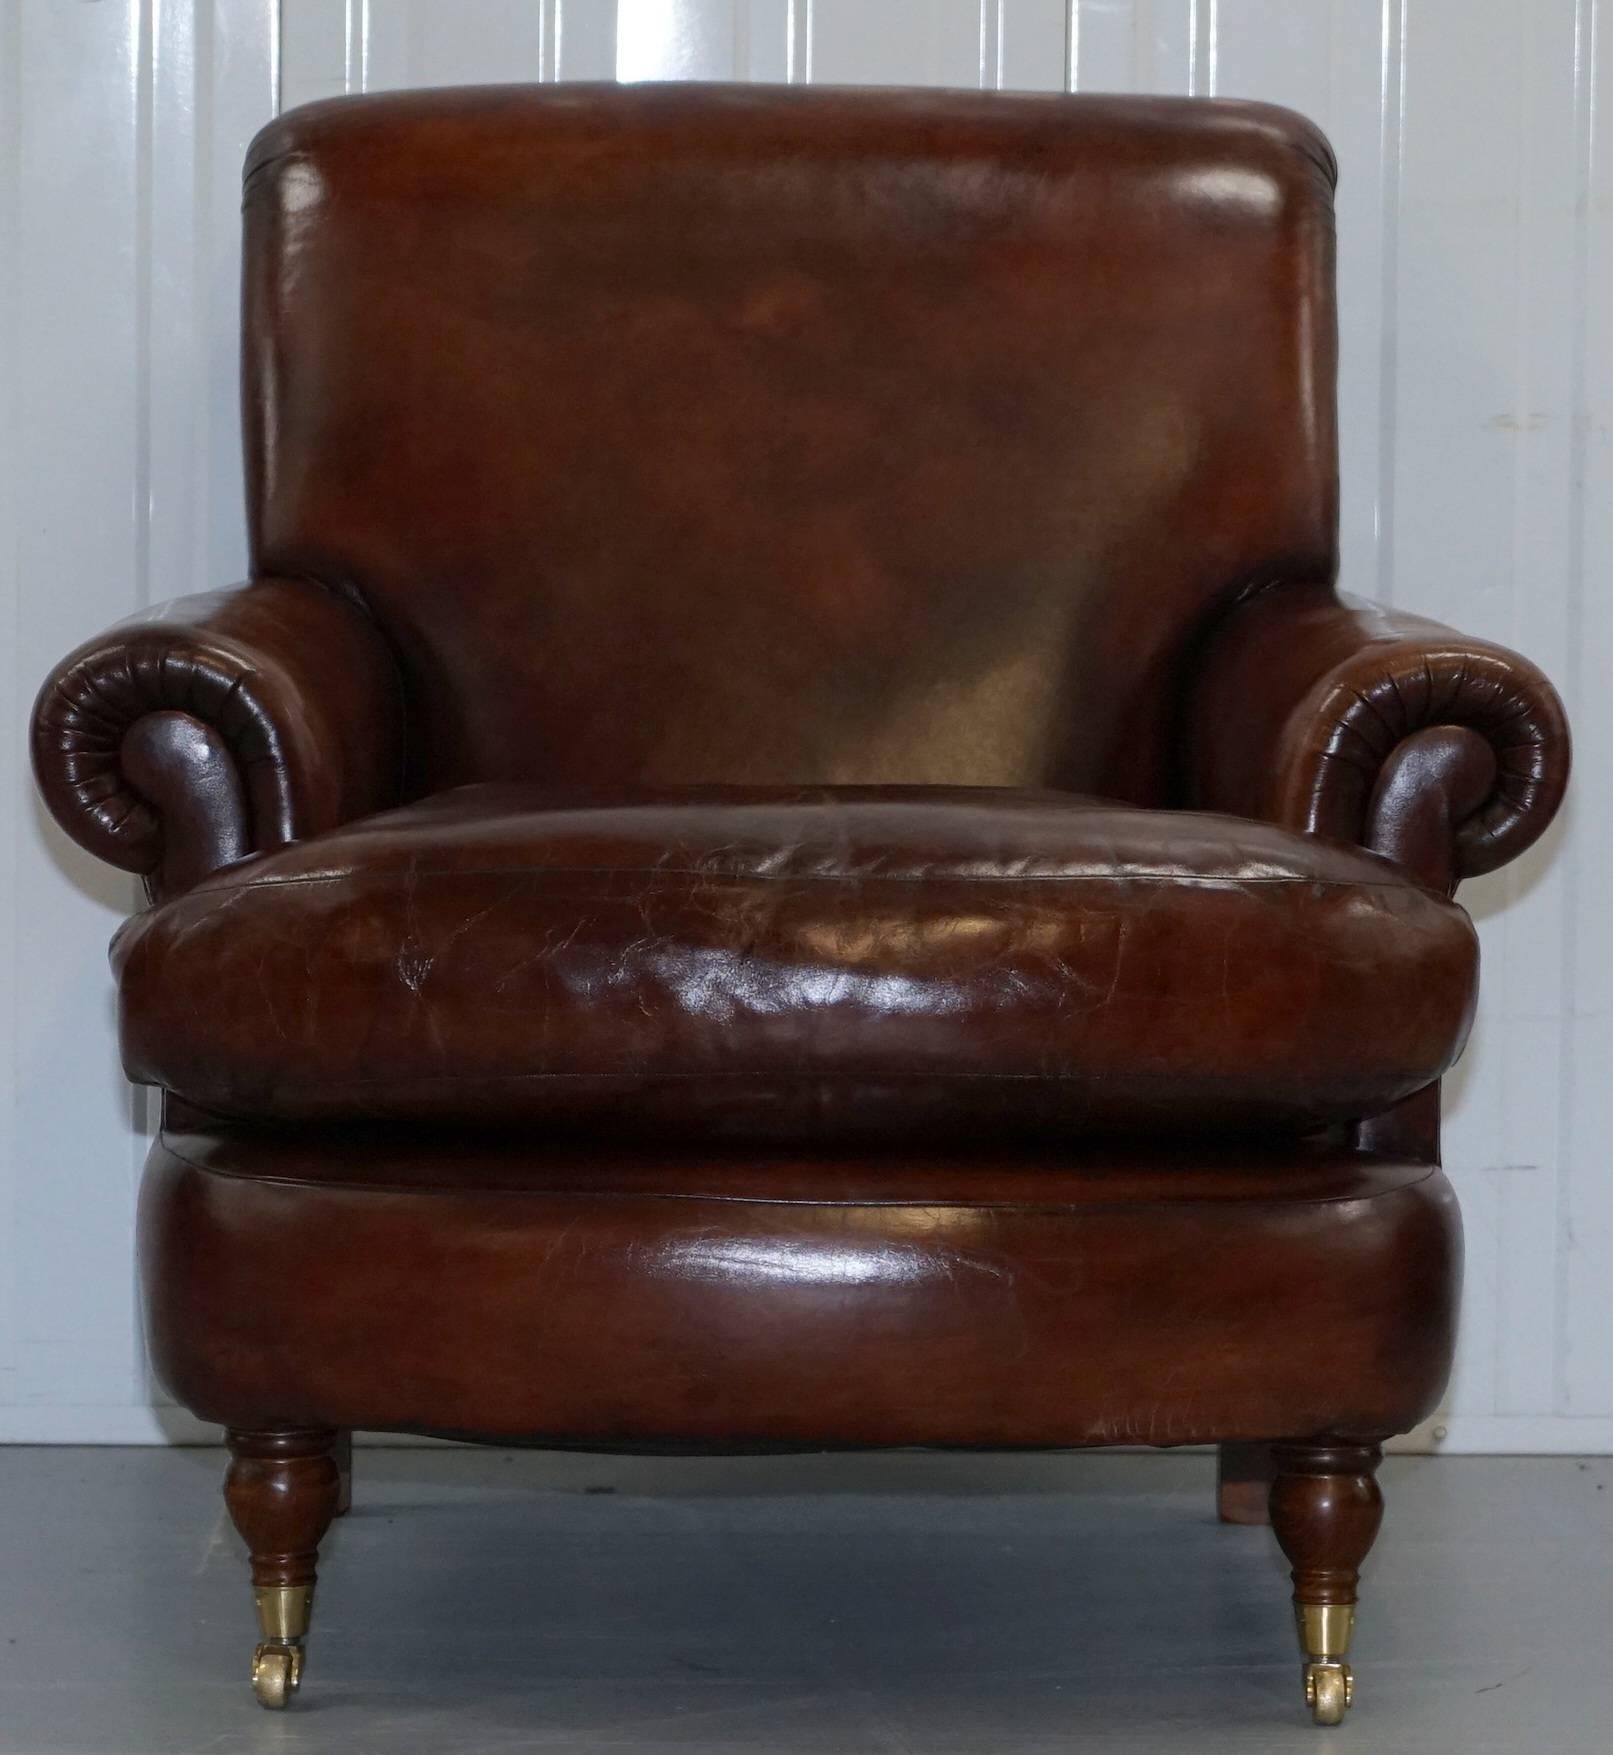 gentleman's leather chair